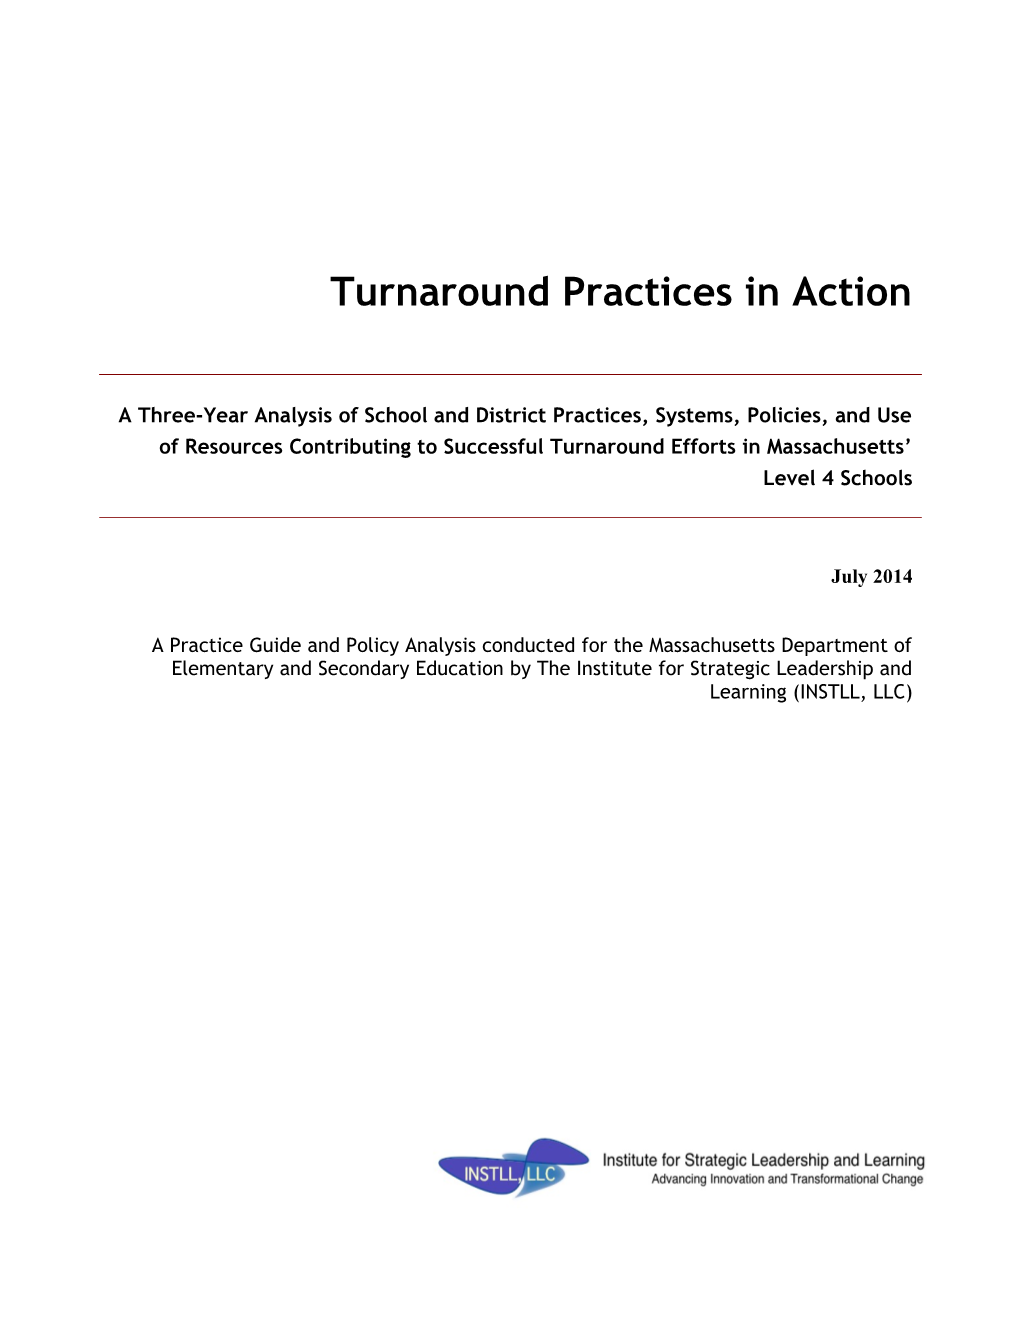 Turnaround Practices Report 2014